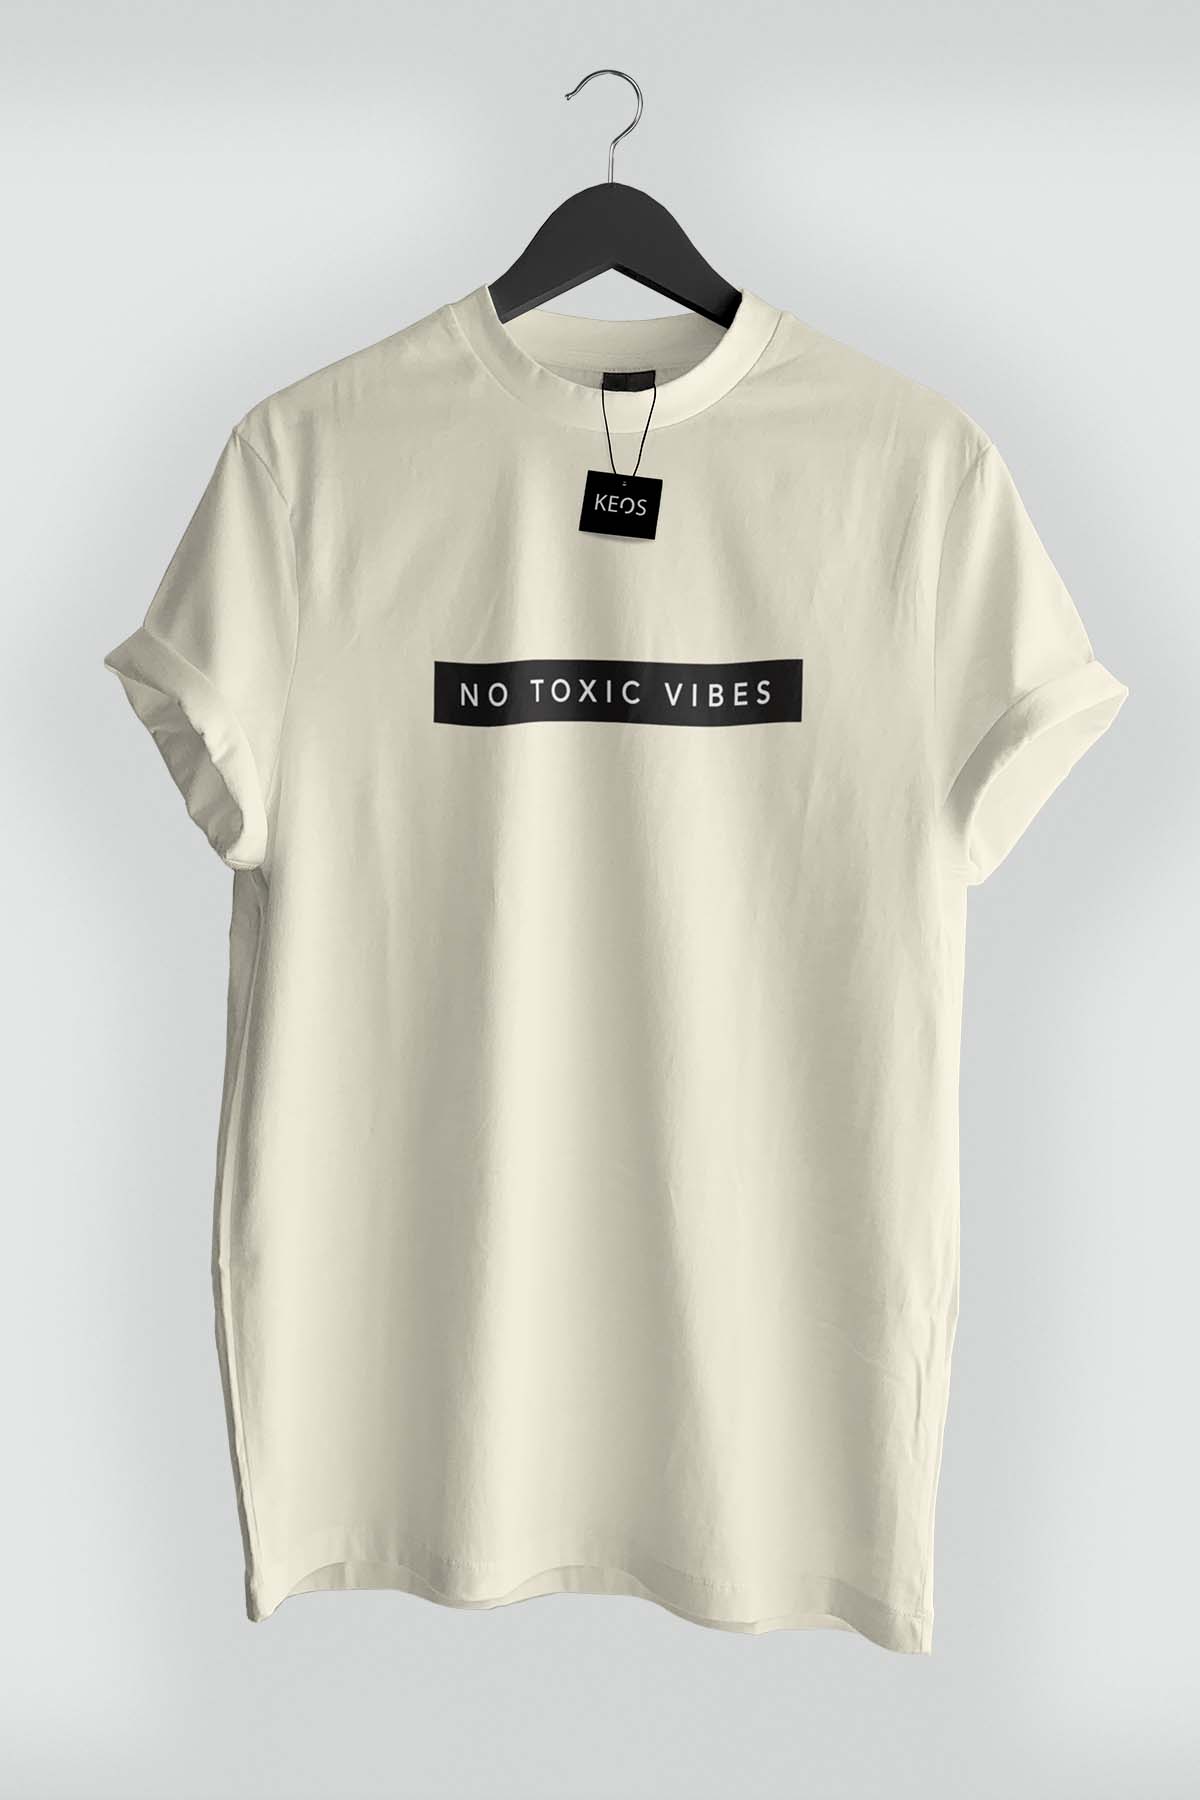 No Toxic Vibes Organic Cotton T-shirt - keos.life